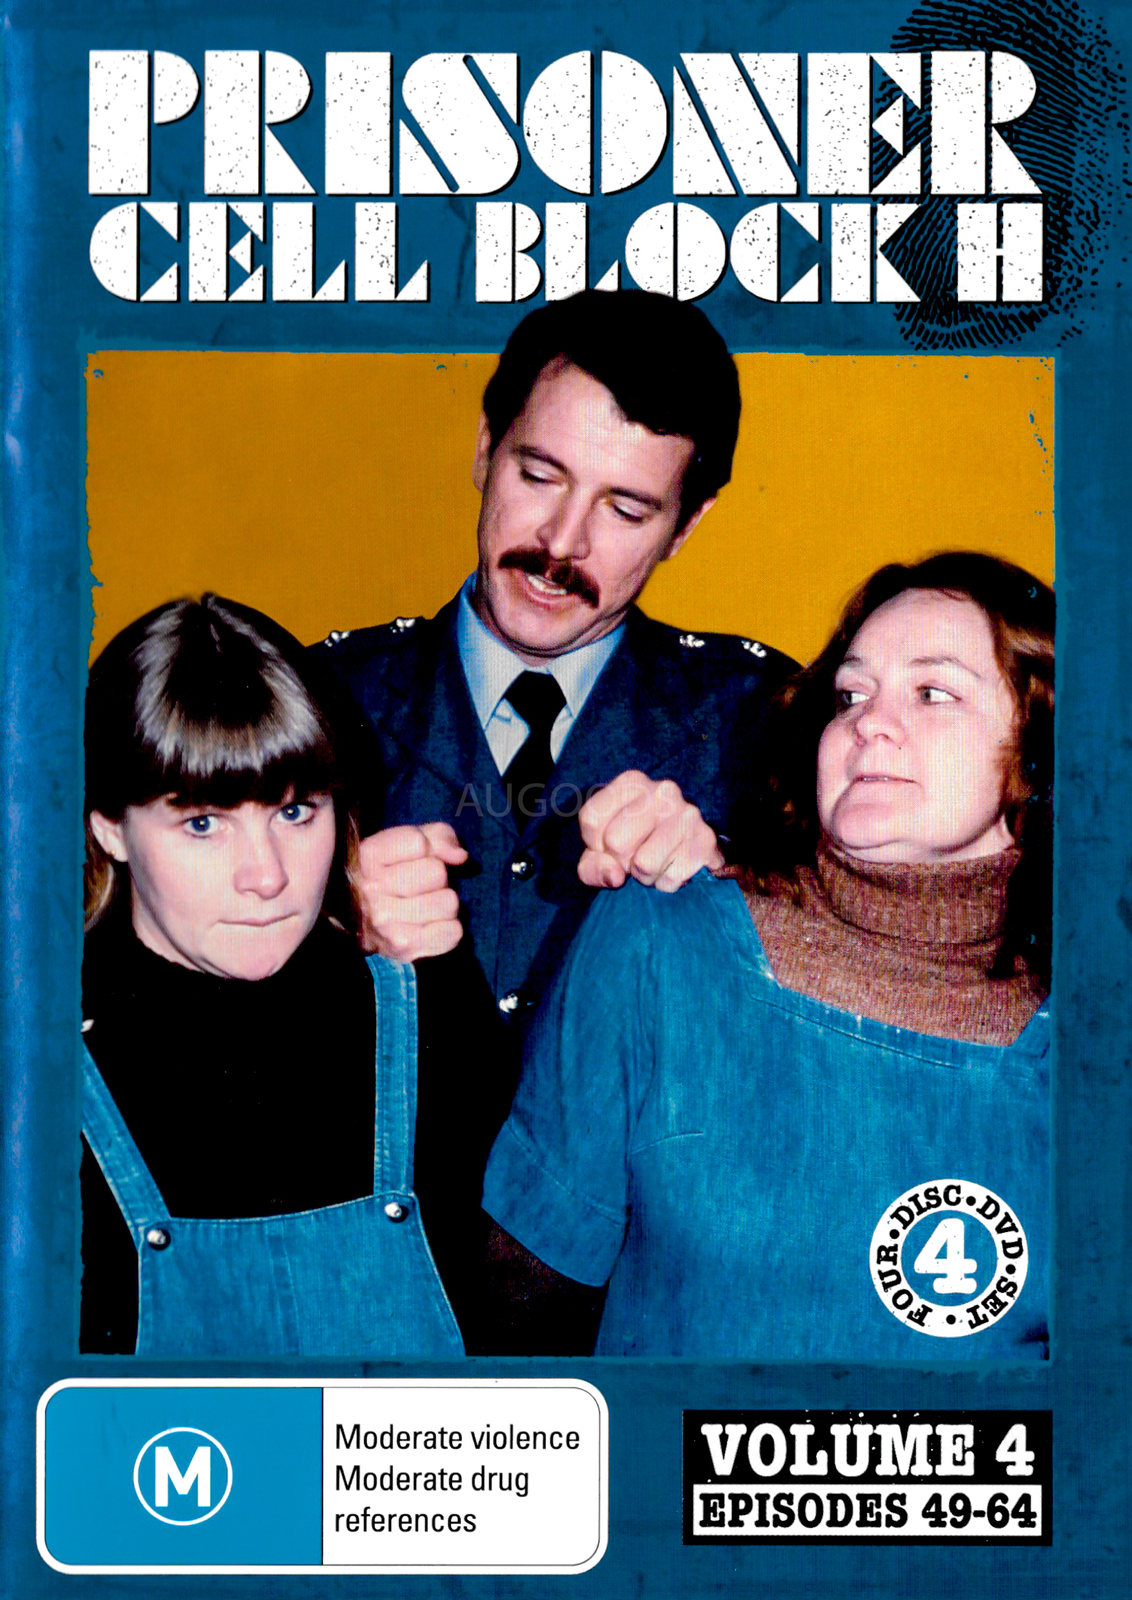 PRISONER CELL BLOCK II: VOL. 4 EPISODES 49-64 - DVD Series ...